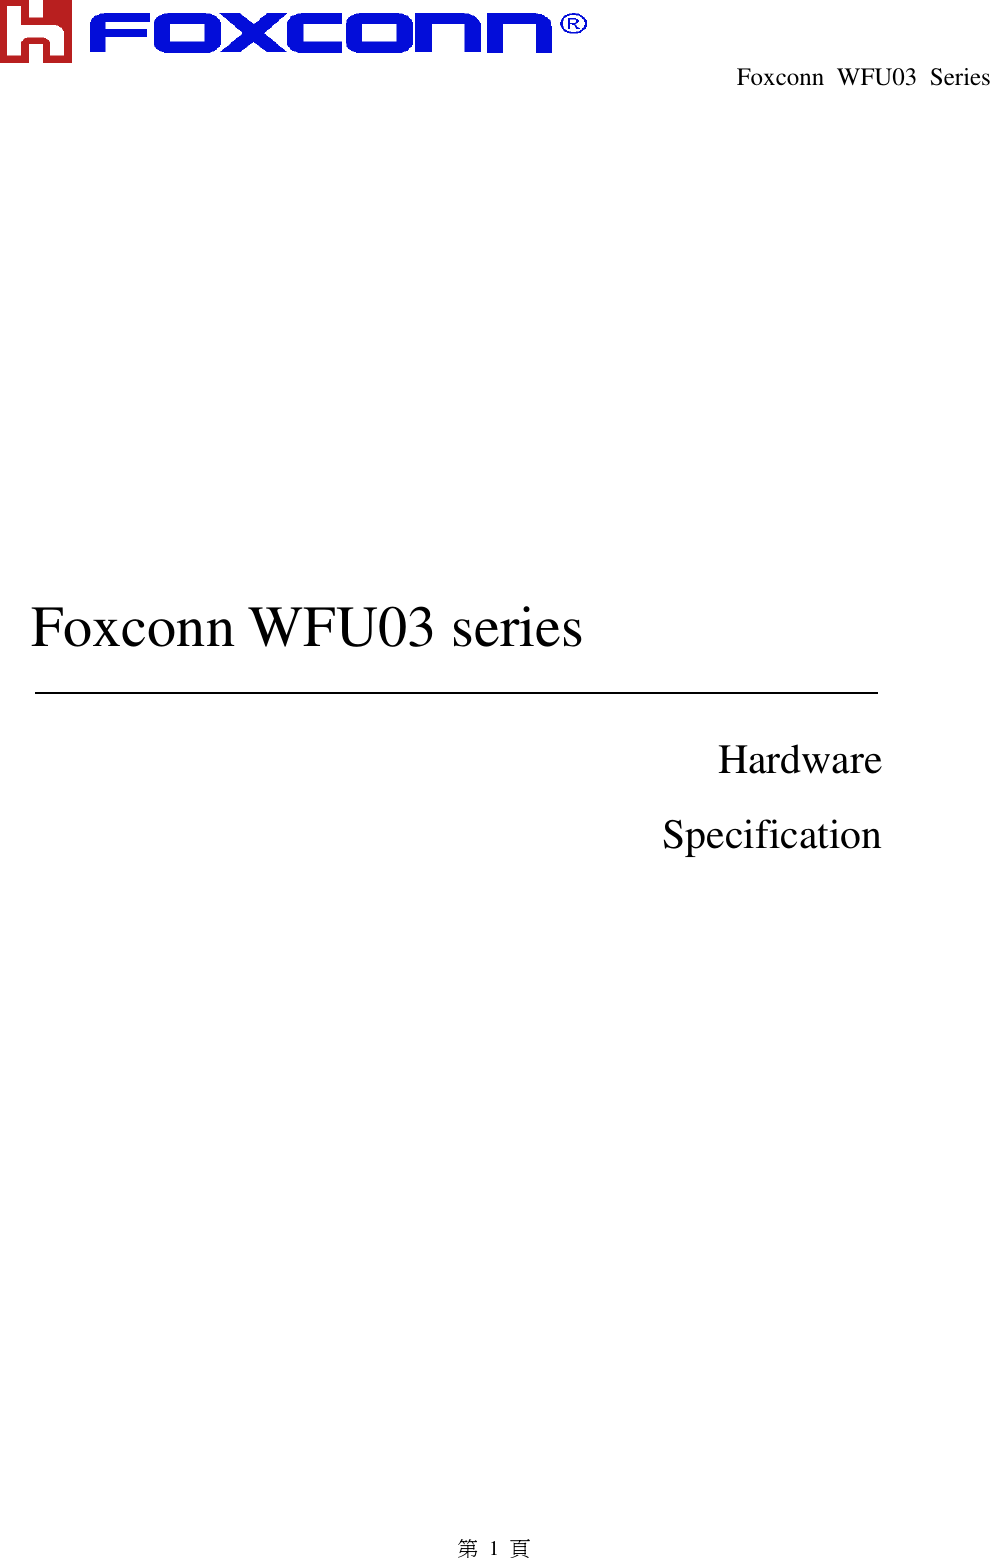  Foxconn  WFU03  Series   第 1 頁                                   Foxconn WFU03 series   f Hardware   Specification 